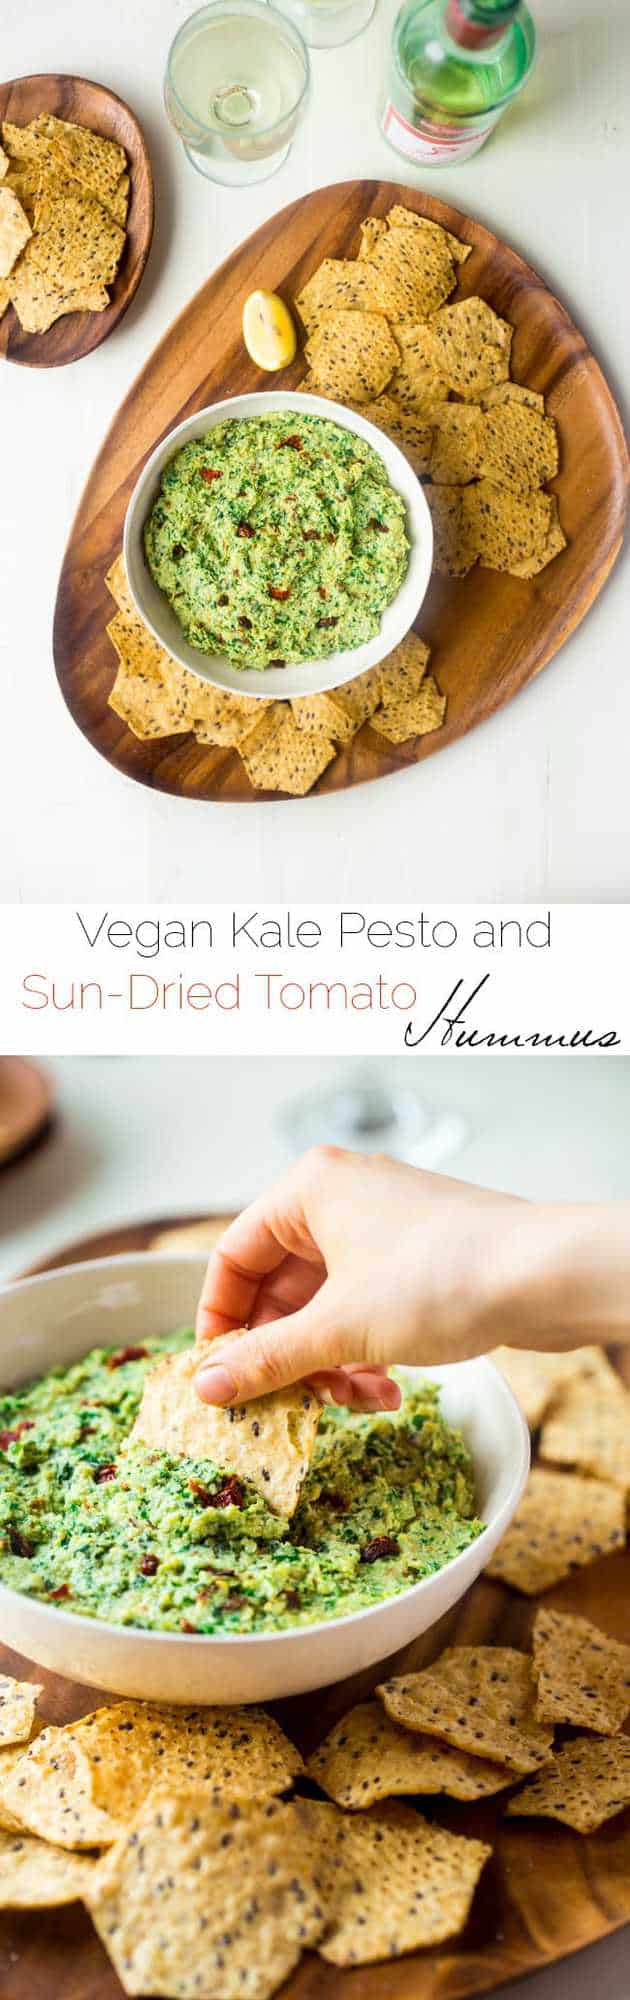 Vegan Kale Pesto and Sun-dried Tomato Hummus - This quick and easy, vegan homemade hummus features kale pesto and sun dried tomatoes. It's a healthy, gluten free appetizer or snack! | Foodfaithfitness.com | @FoodFaithFit